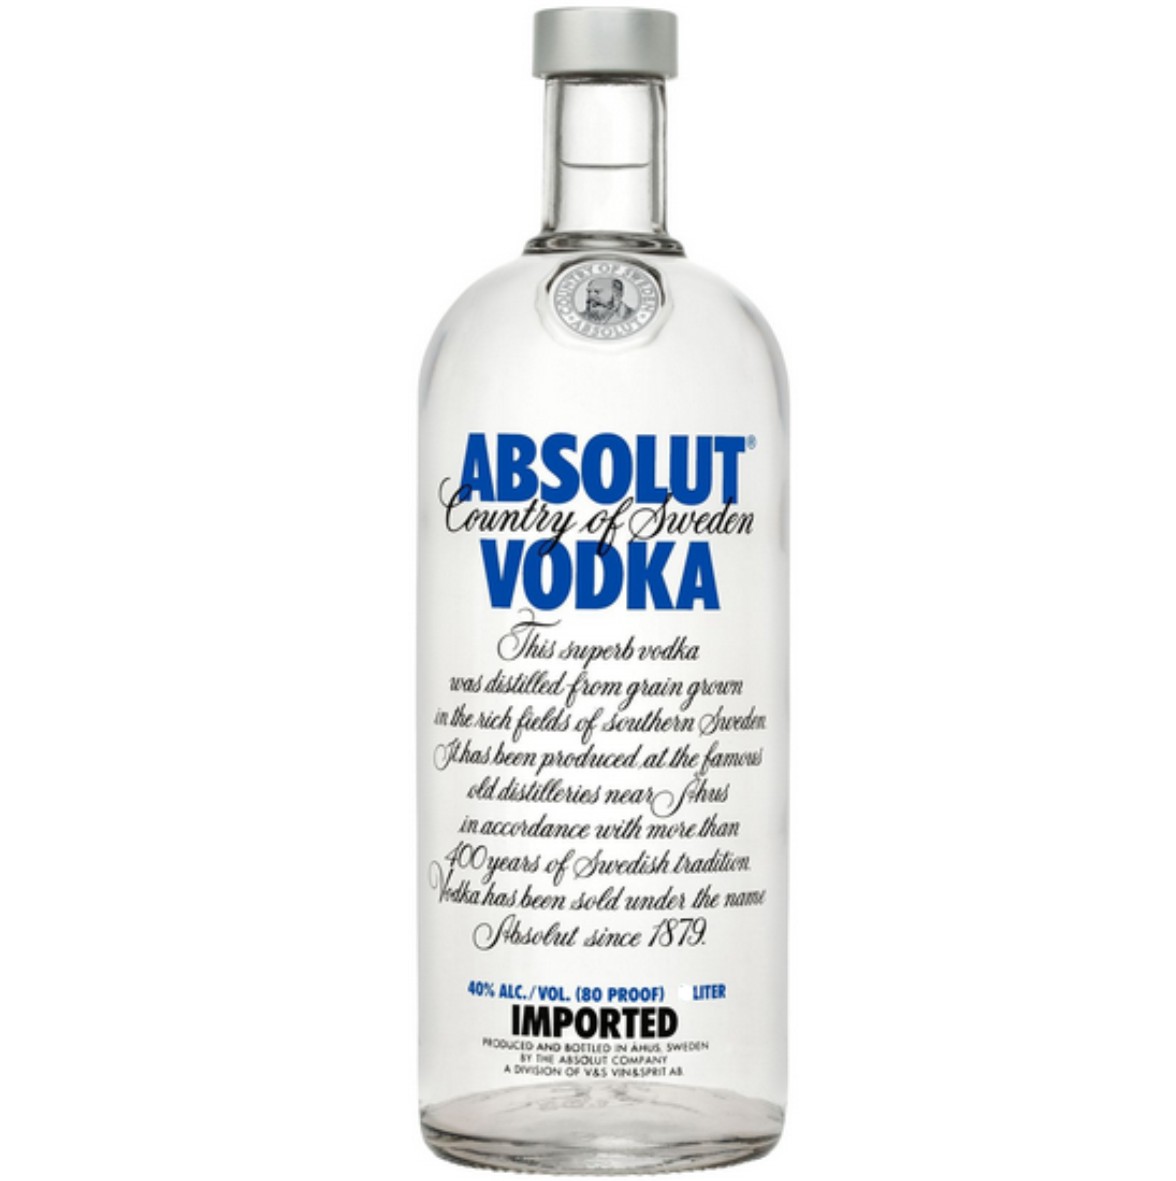 Treble repertoire chef Absolut Vodka XXL 450cl – "De Druiventros" Breda